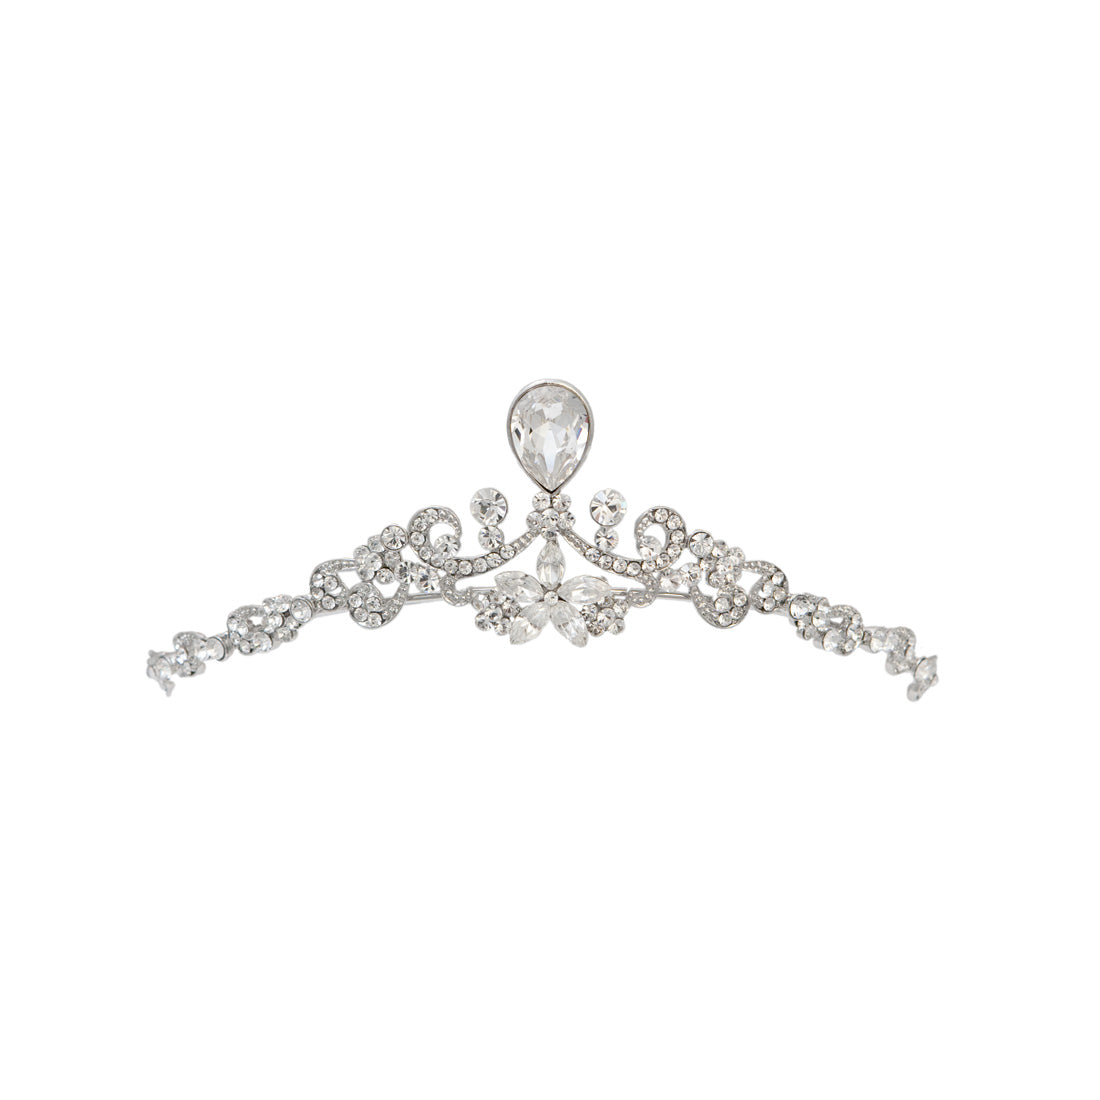 Classic Romance Pear Cut Crystal Wedding Tiara